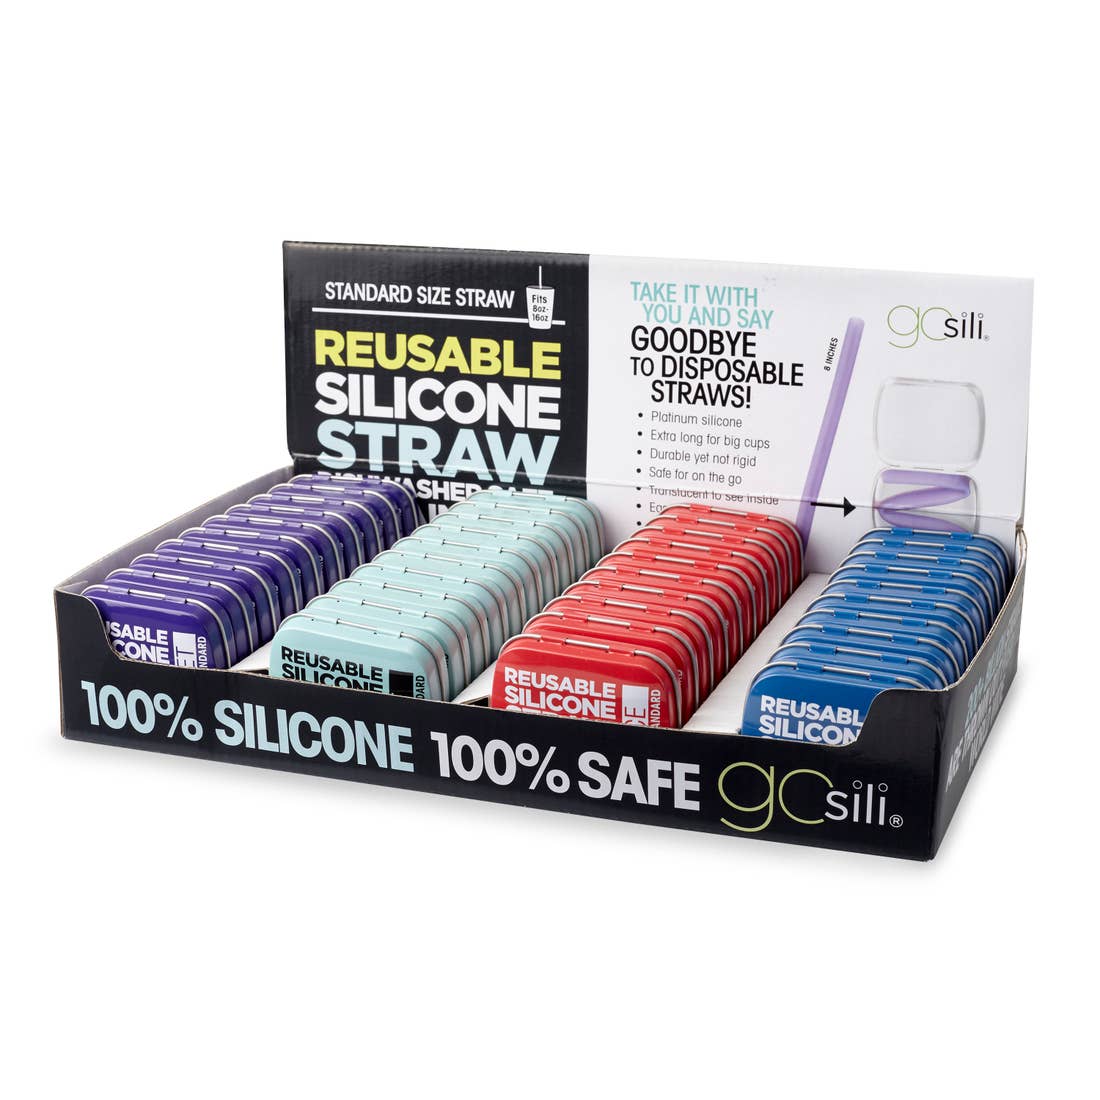 GoSili® Silicone Straw Family Pack, Multi-length Eco-Friendly Reusable